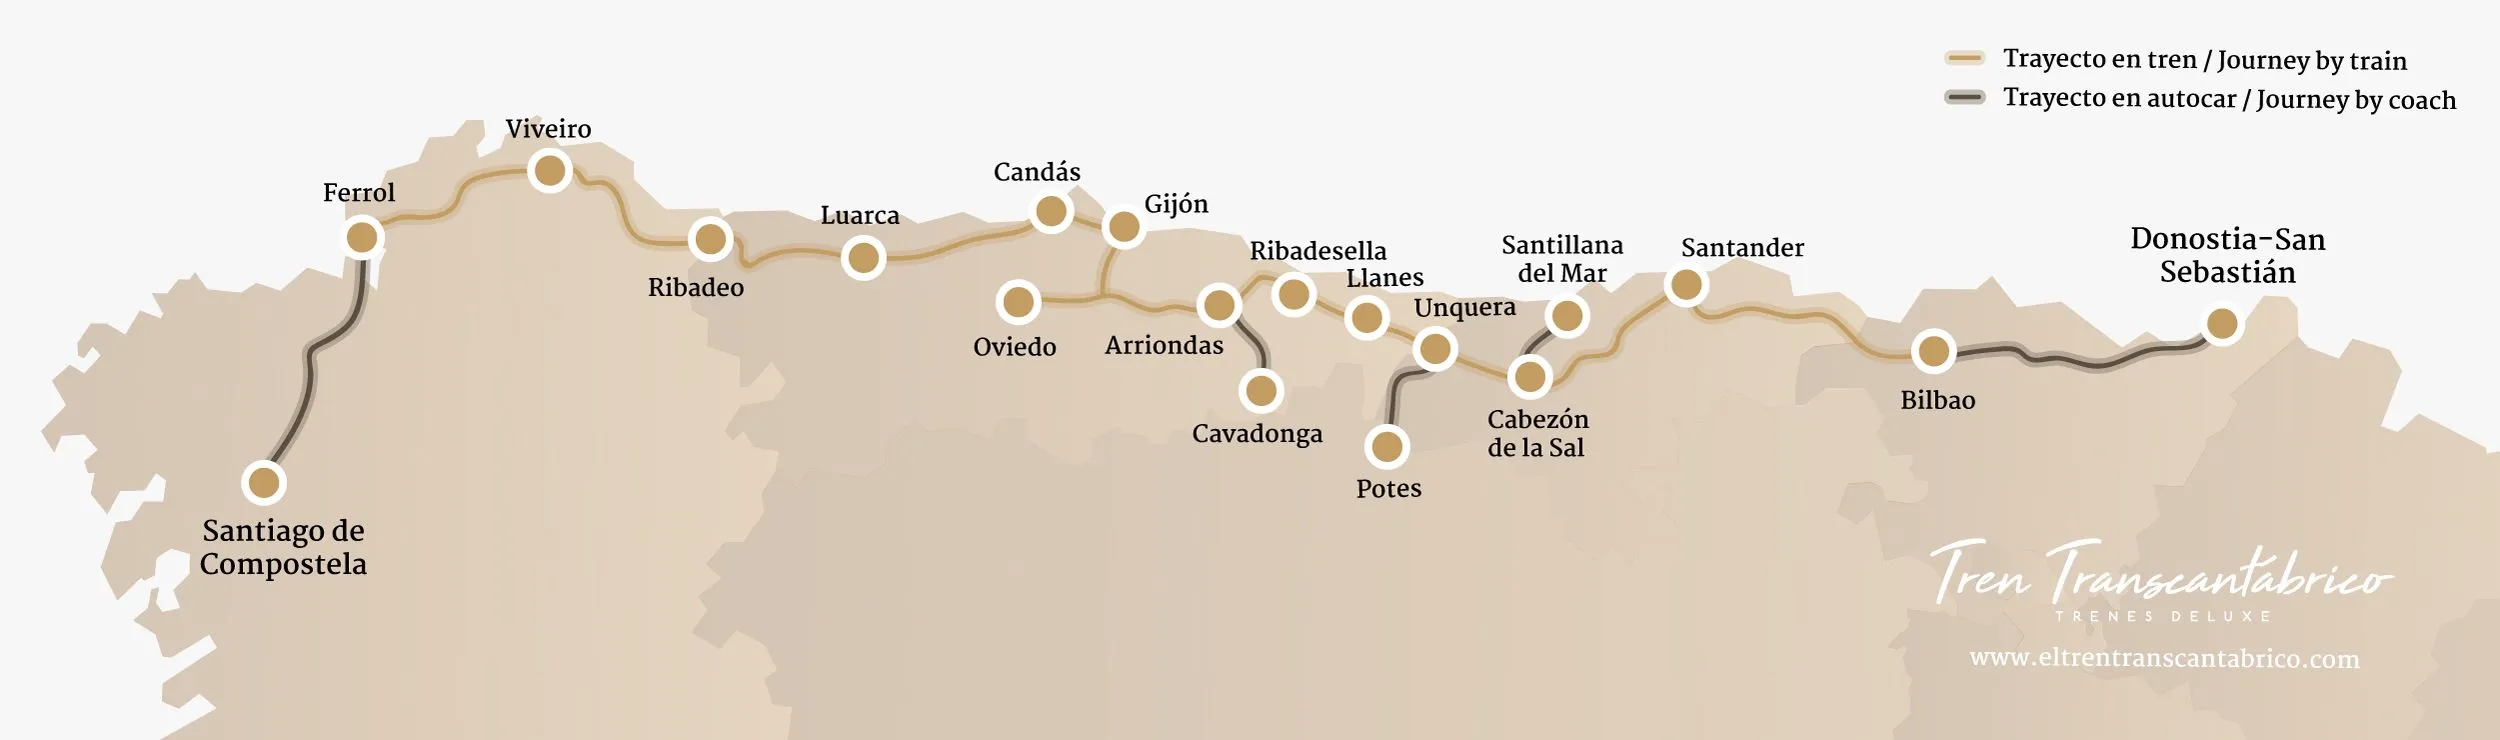 Transcantabrico Train, a trip through the north of Spain - Trenes 